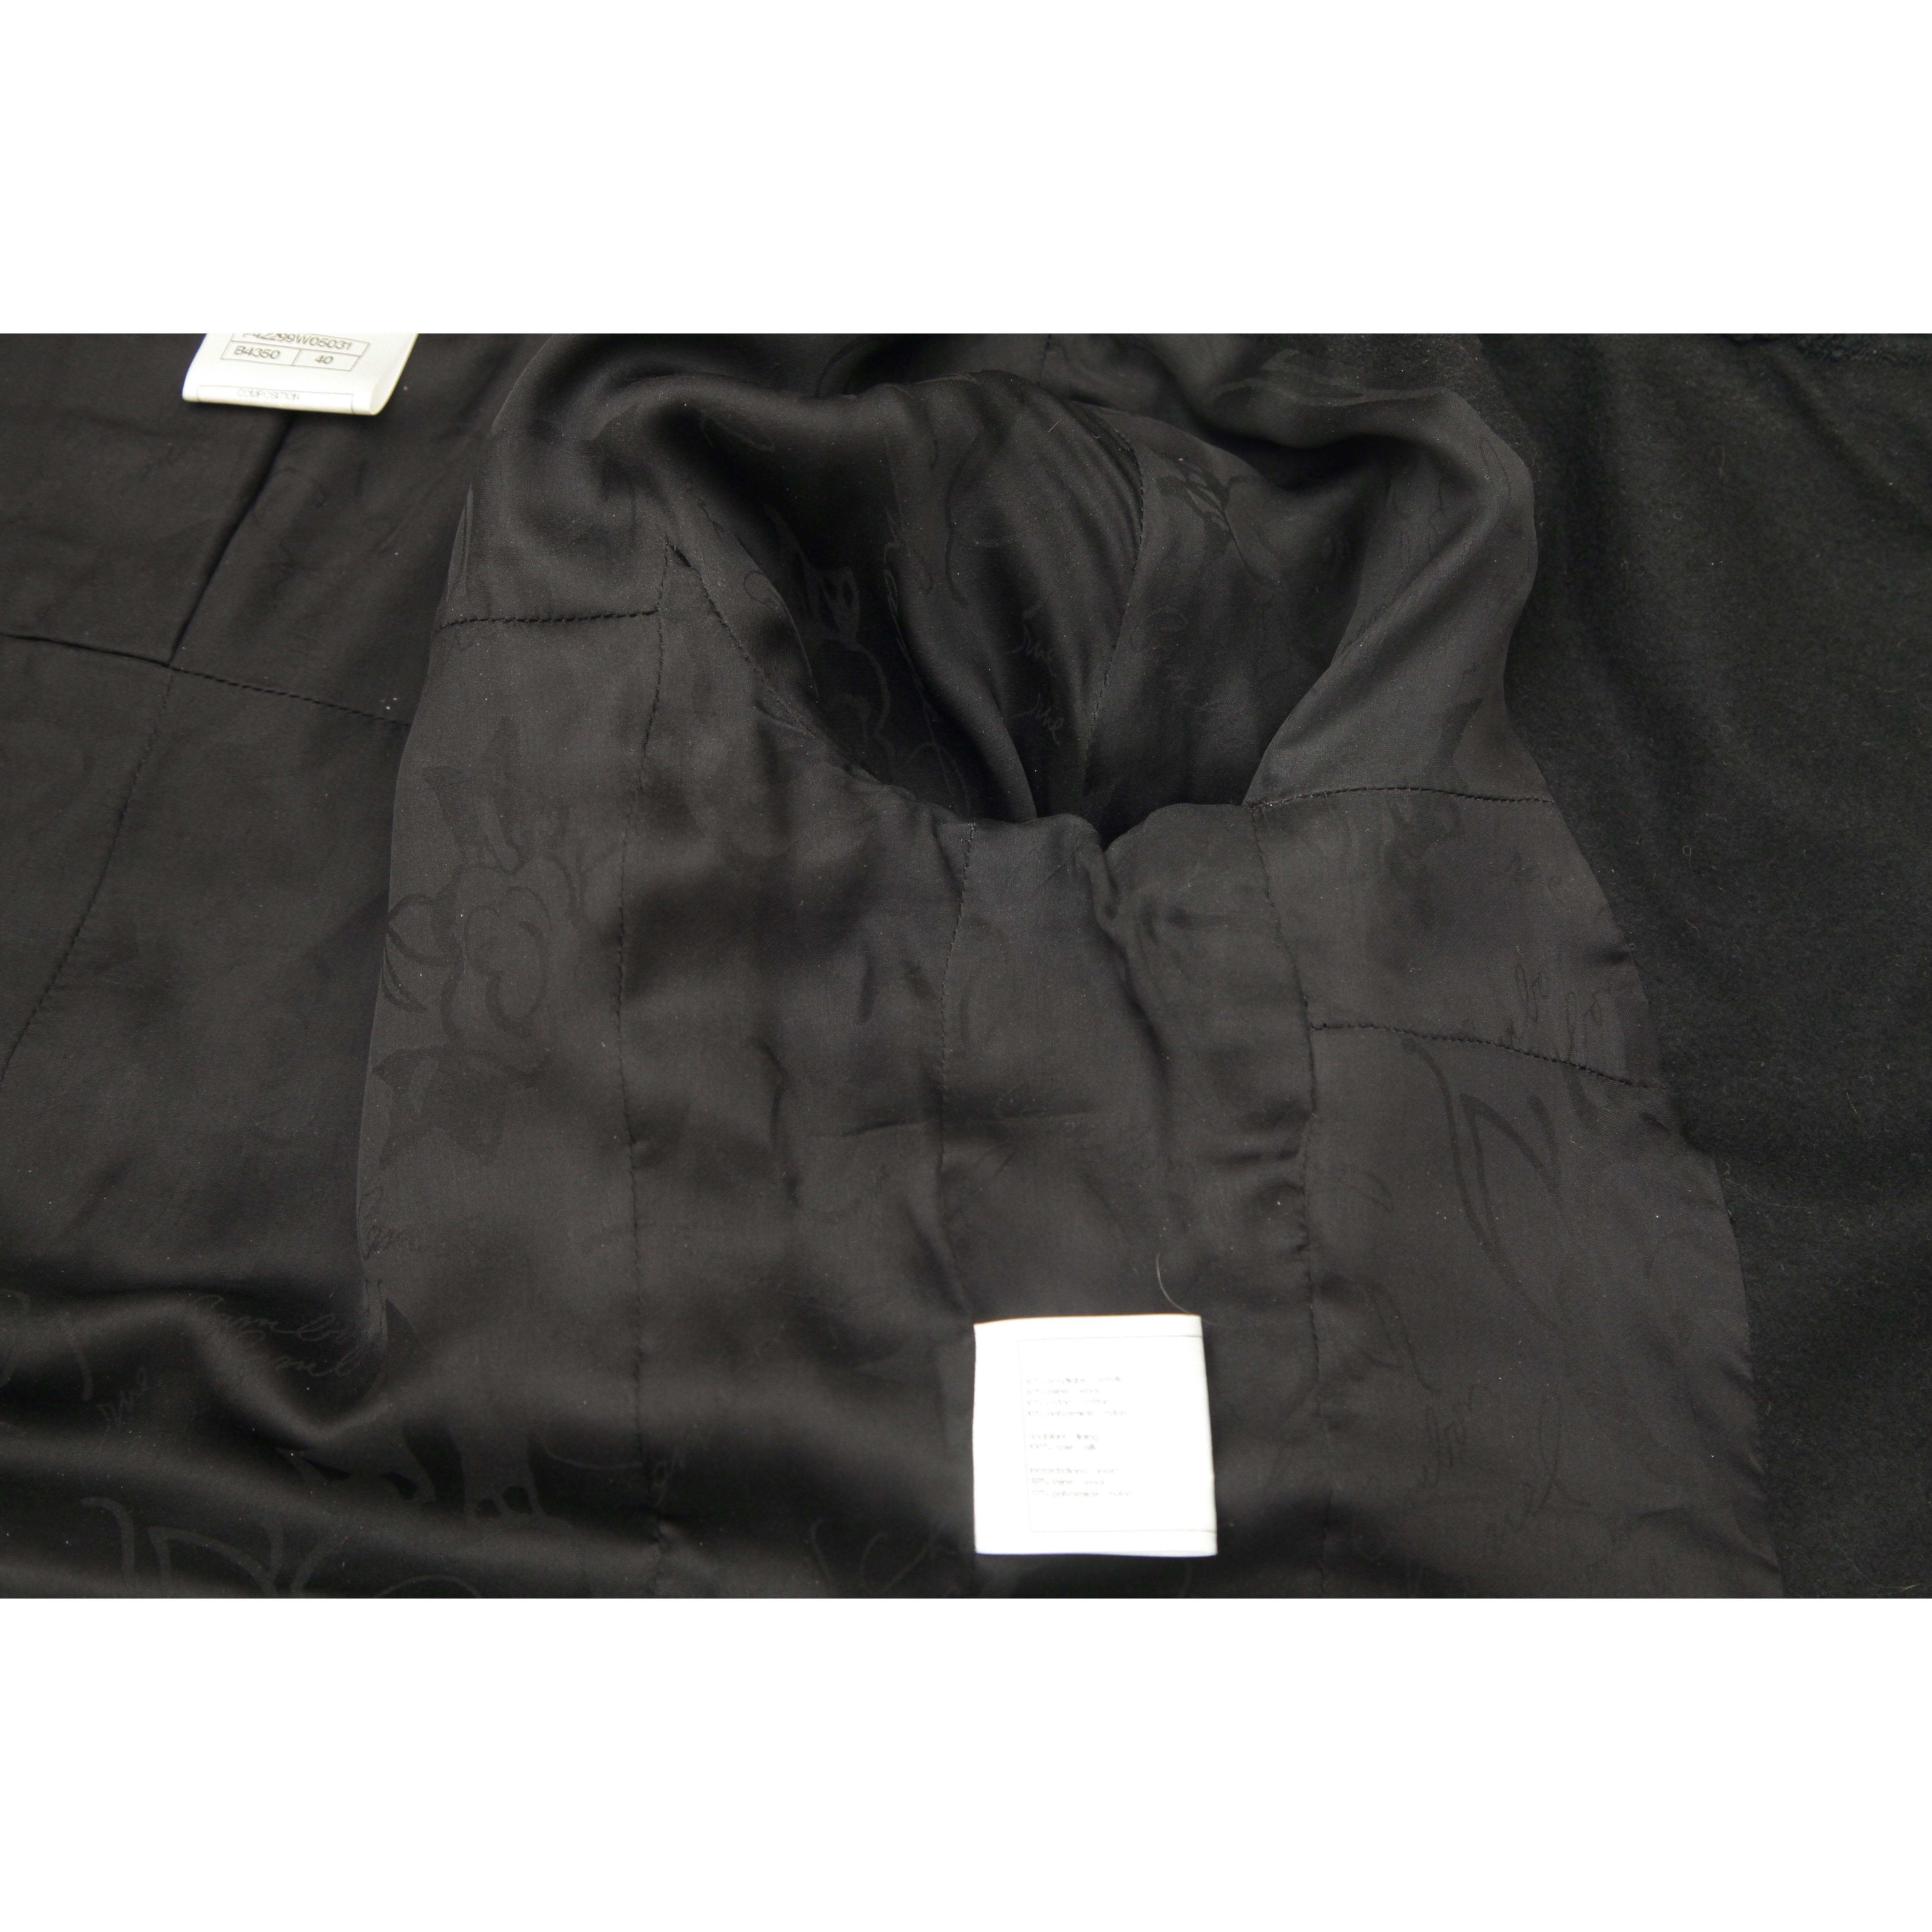 CHANEL Tweed Black Jacket Blazer Buttons Long Sleeve Pockets Sz 40 2011 11A 6